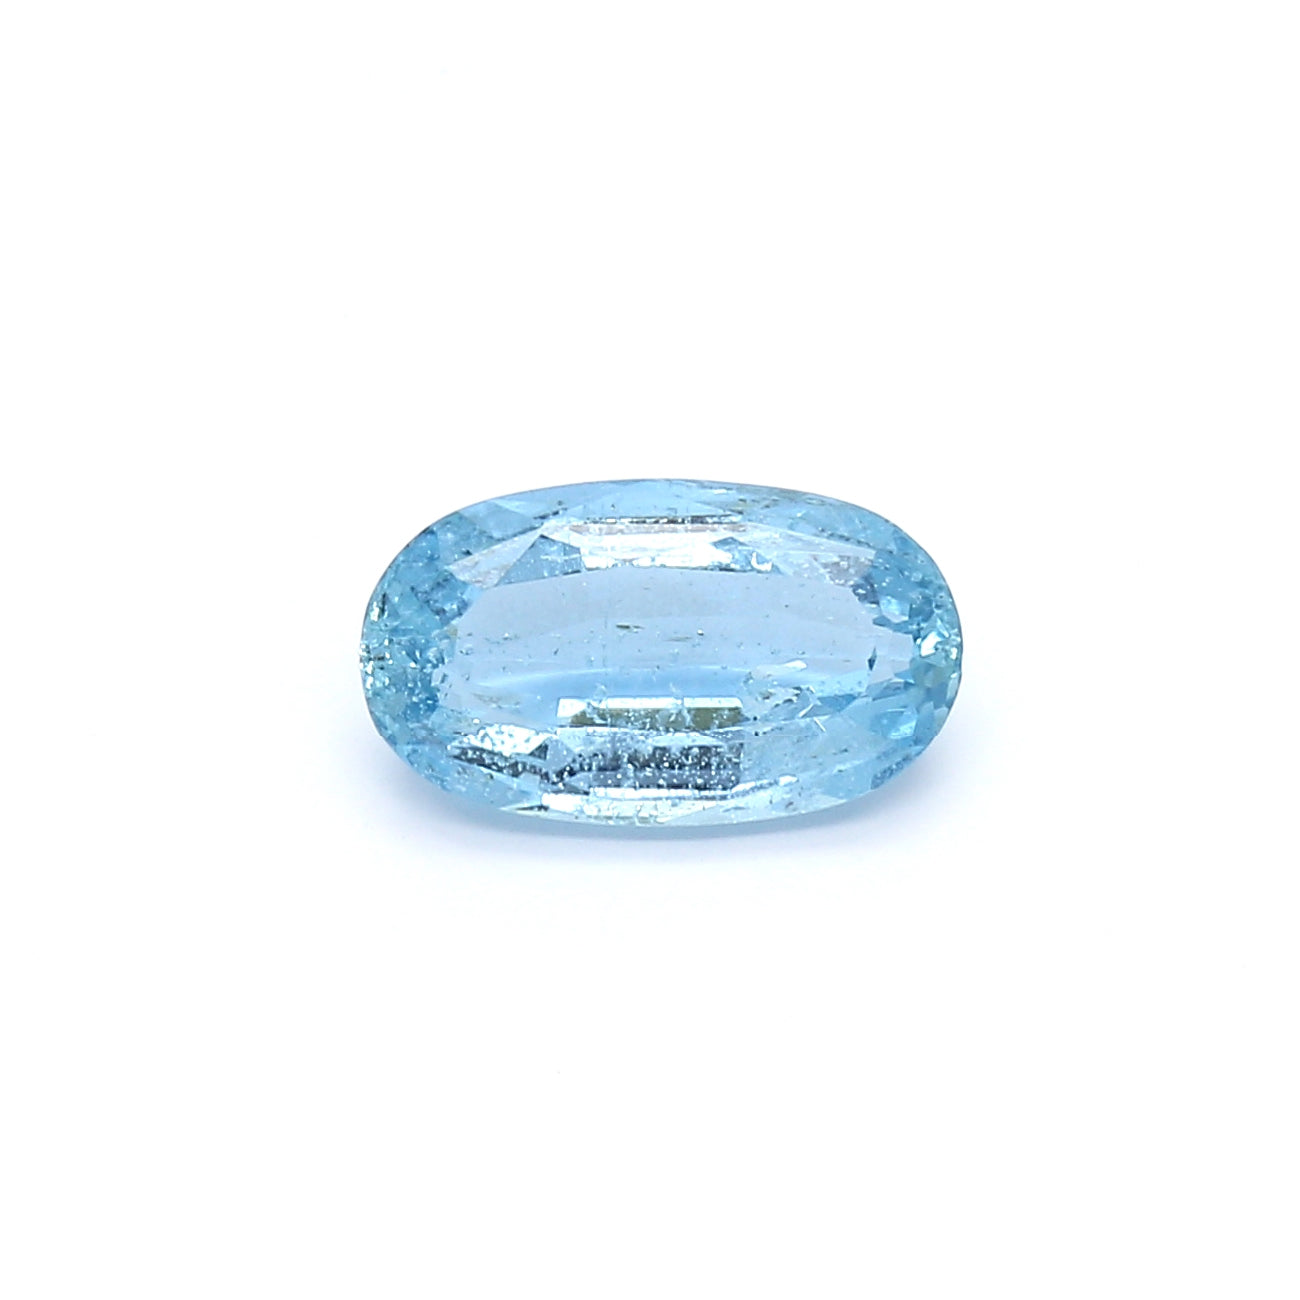 1.67ct Oval Aquamarine, No Treatment - 10.46 x 6.06 x 3.94mm